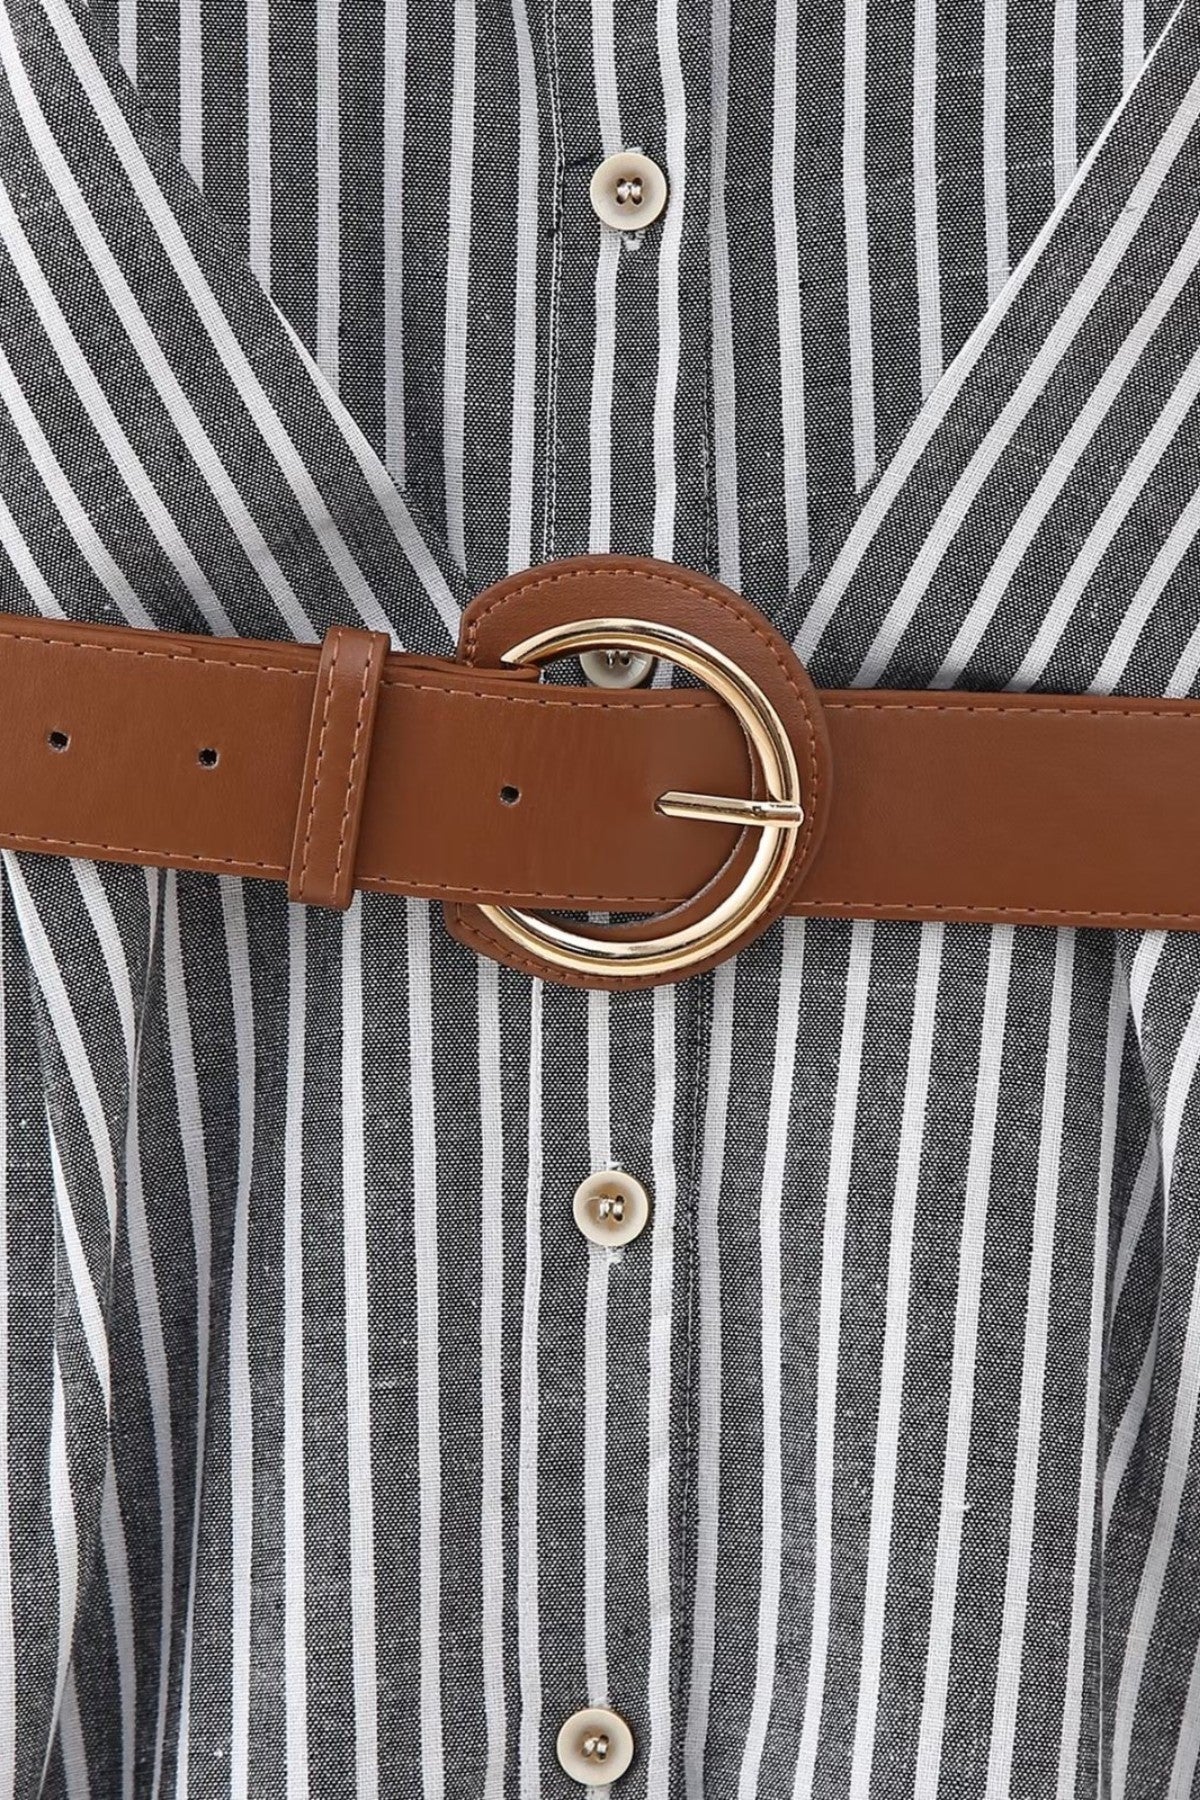 SKYLAR Striped Button-Down Dress W/ Belt (Deep Gray)